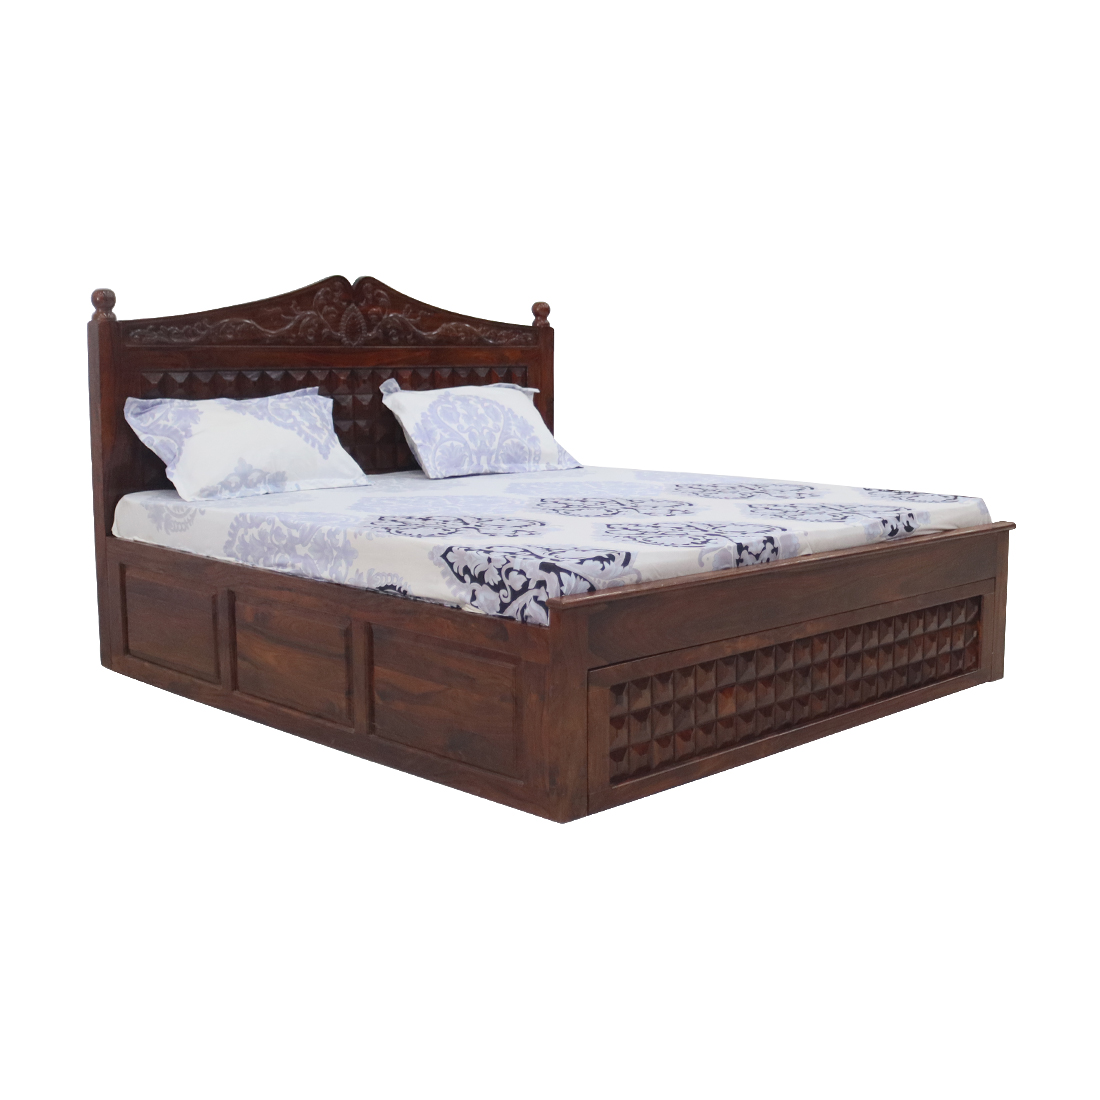 Queen Size Bed Teak Wood Finish - Carvin Head Box Pattam Box Storage